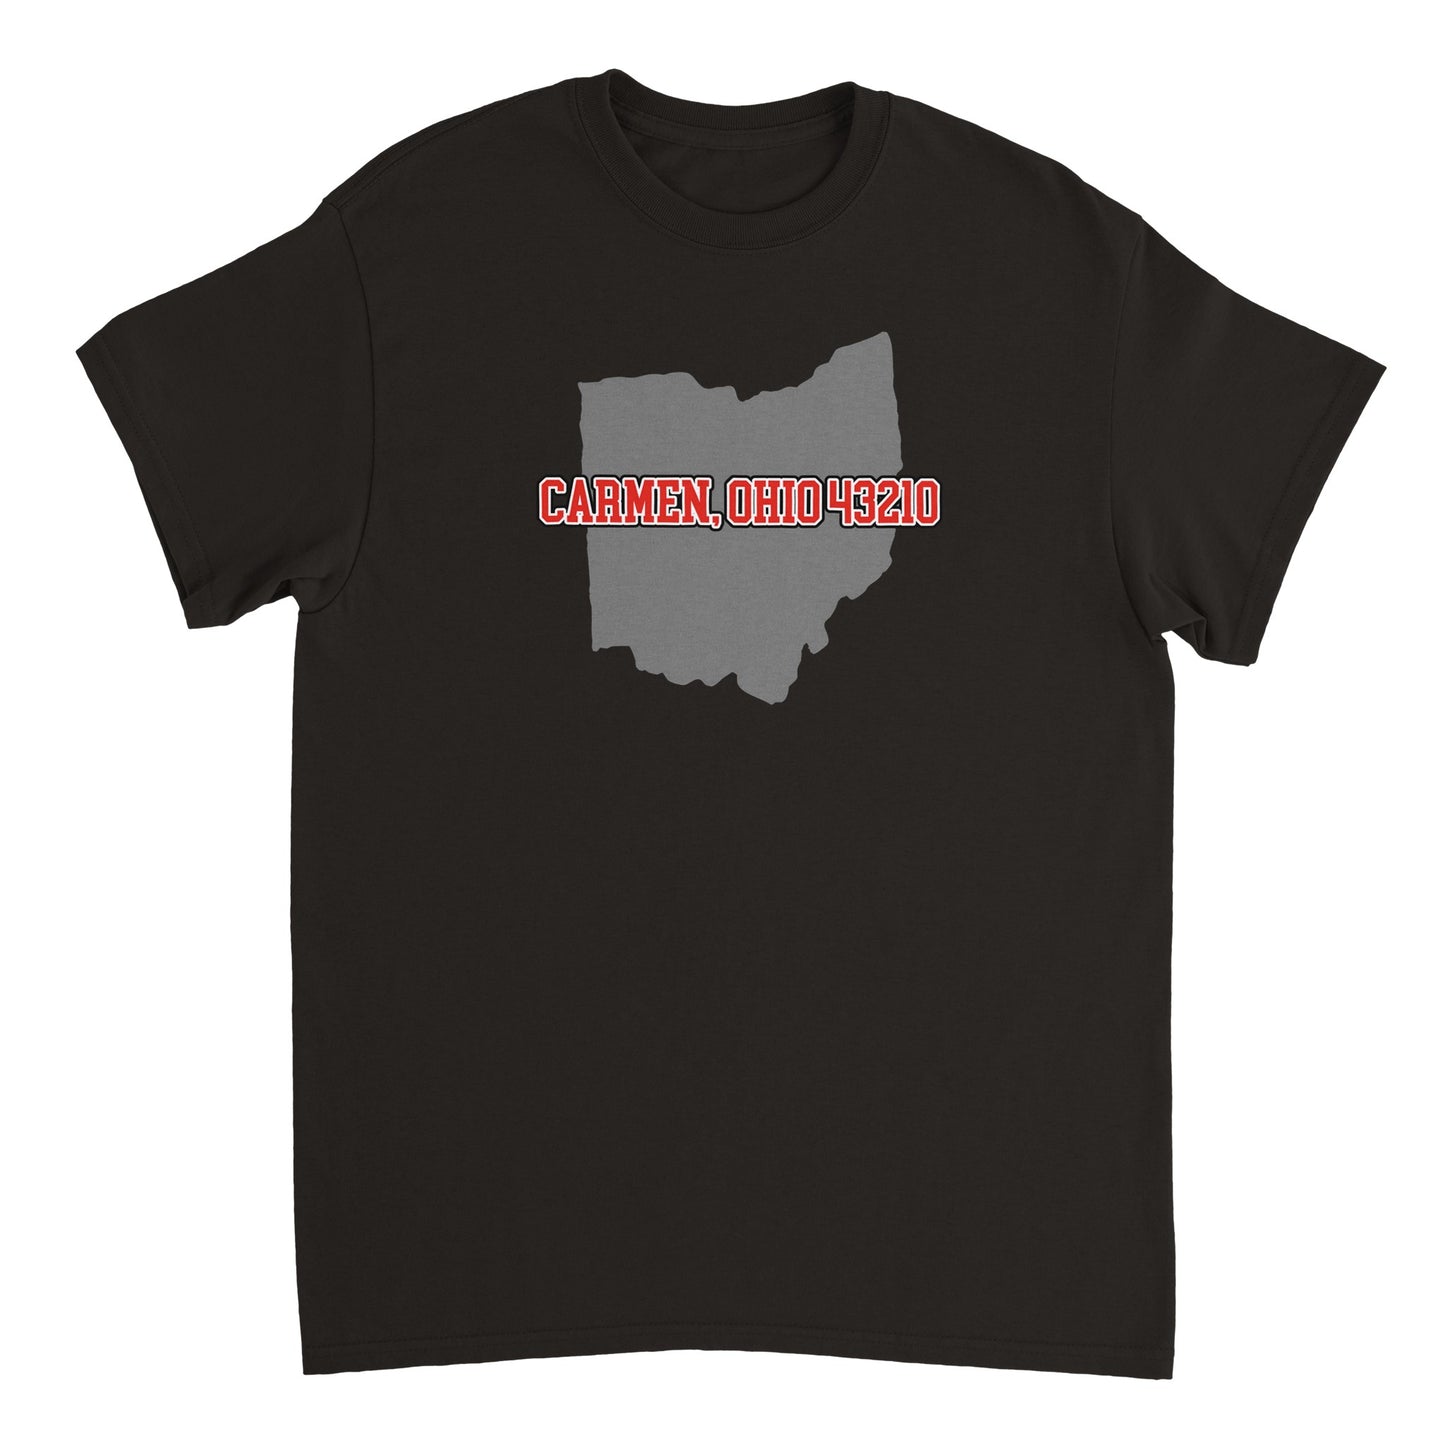 Grey Ohio Design Heavyweight Unisex Crewneck T-shirt